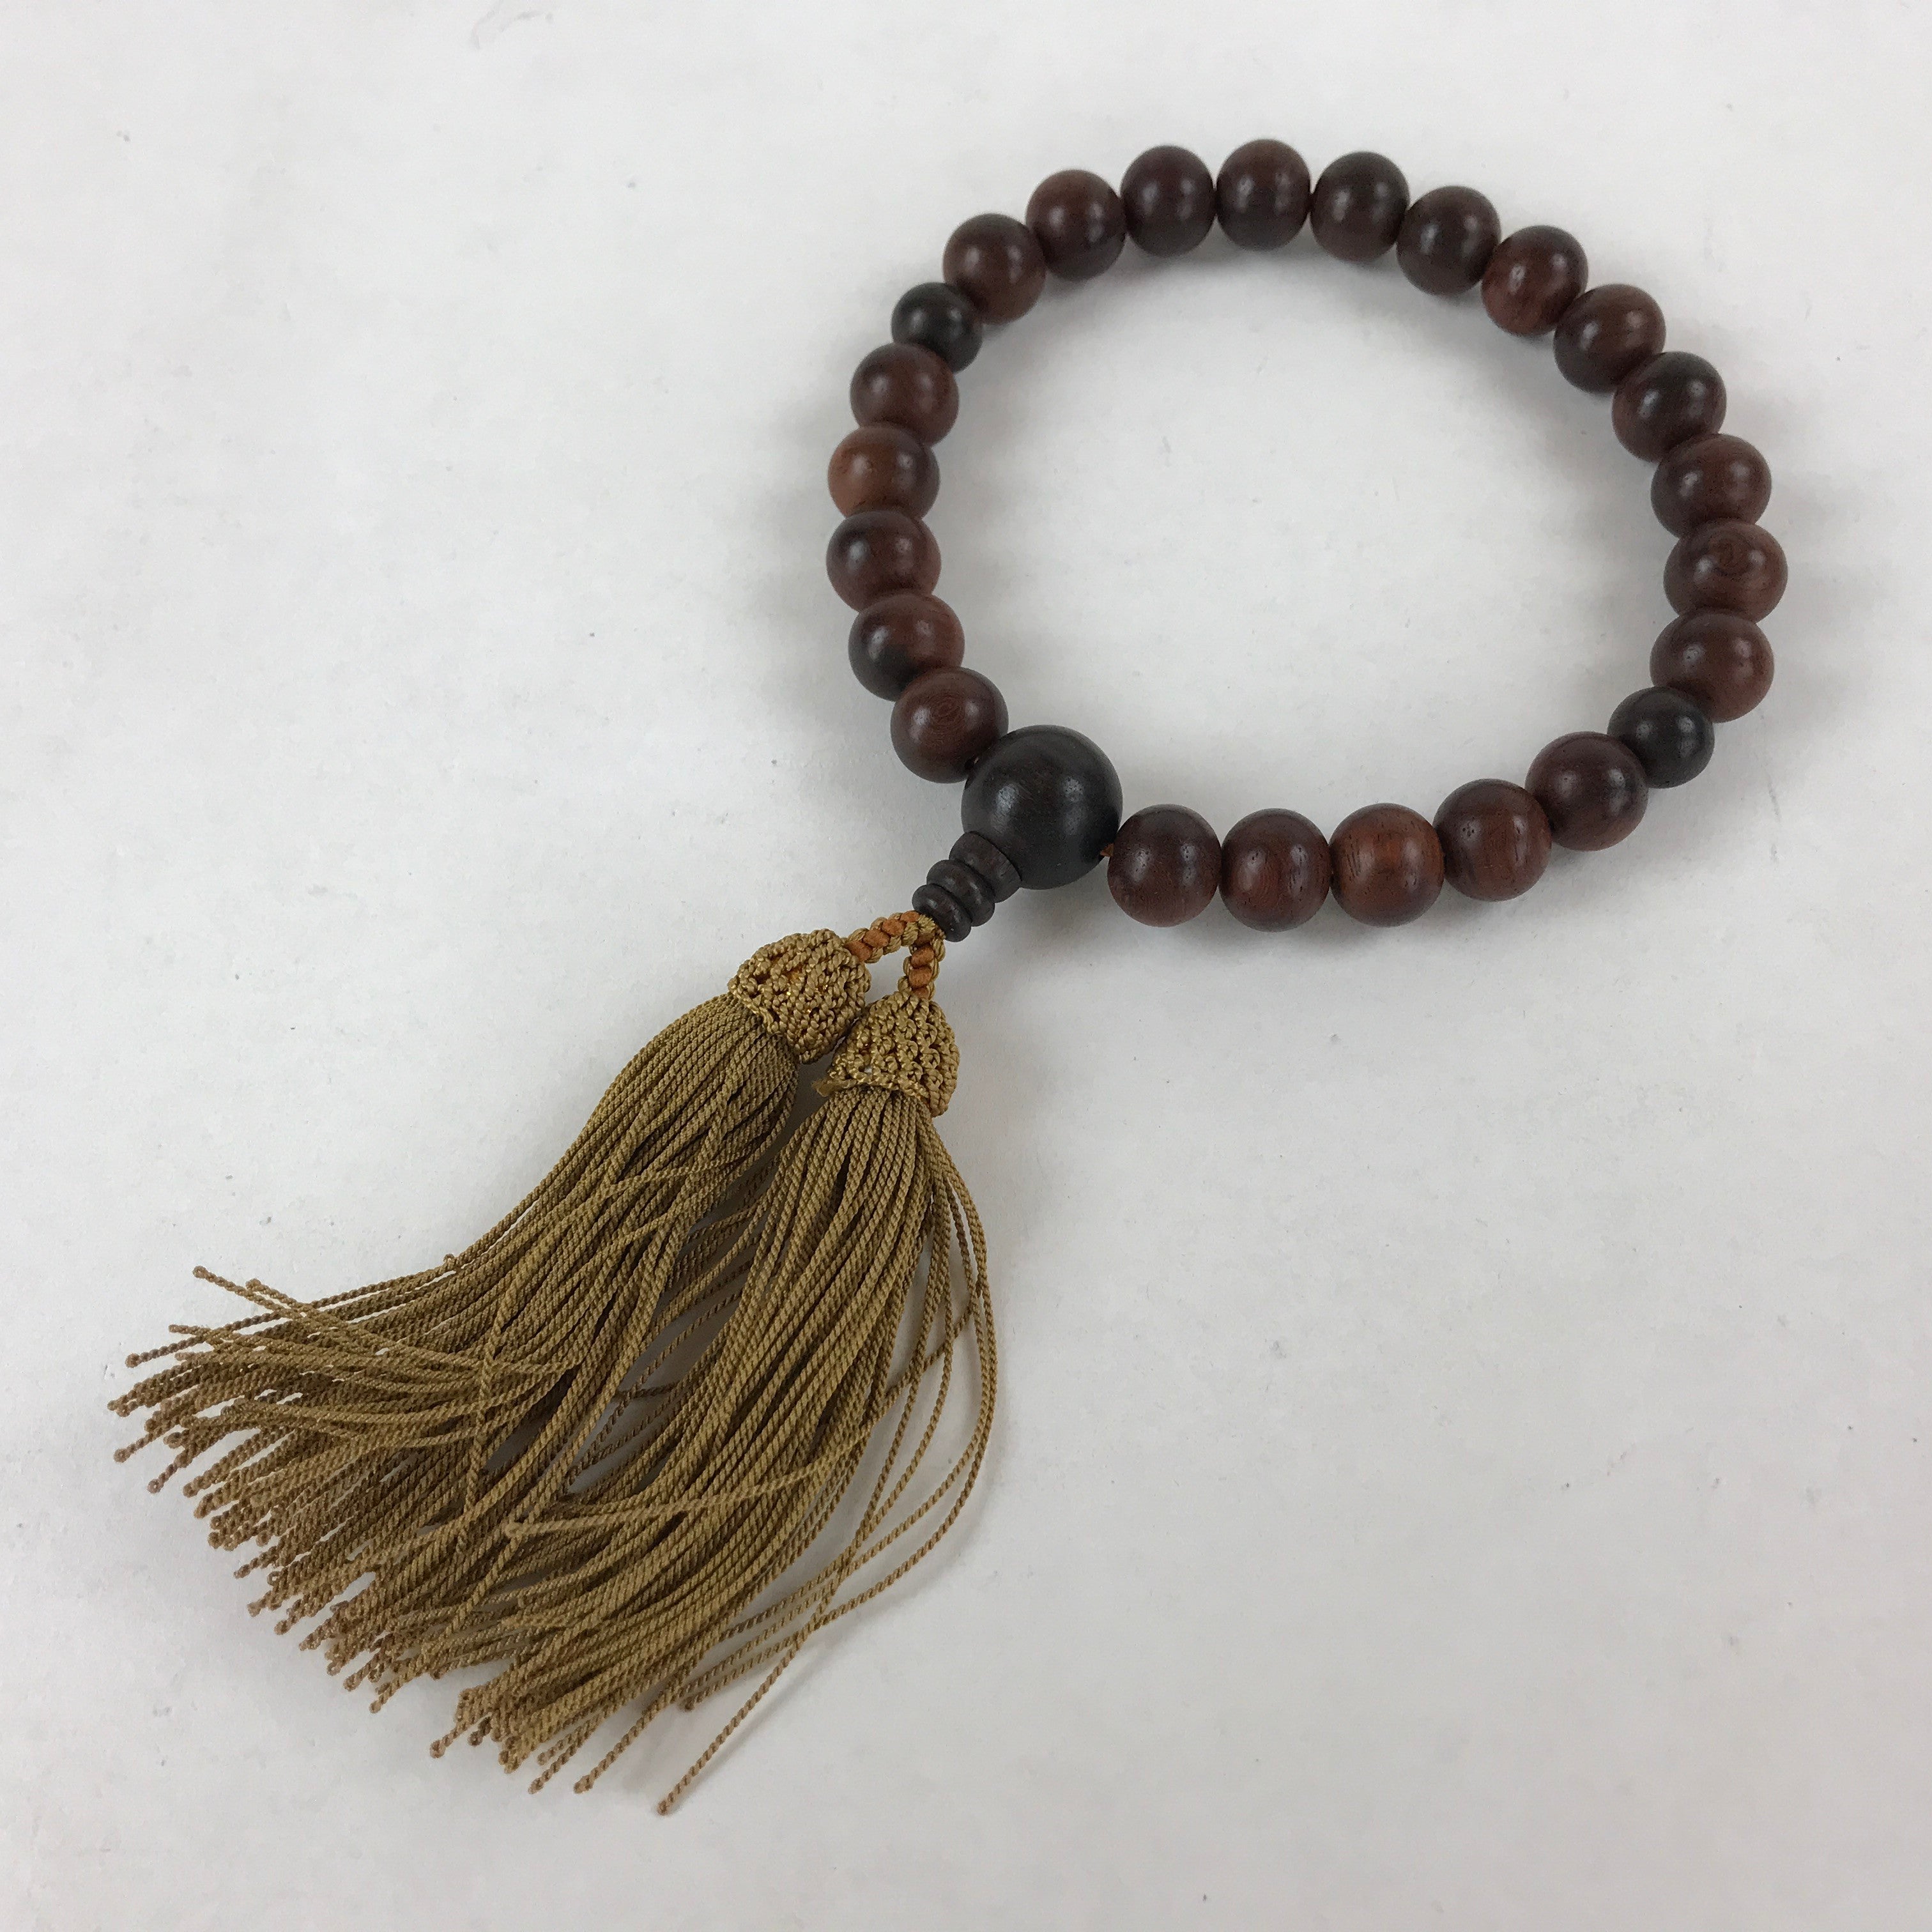 NEW 108 Sandalwood Buddhist Buddha Meditation Prayer Bead Bracelet Necklace  on OnBuy